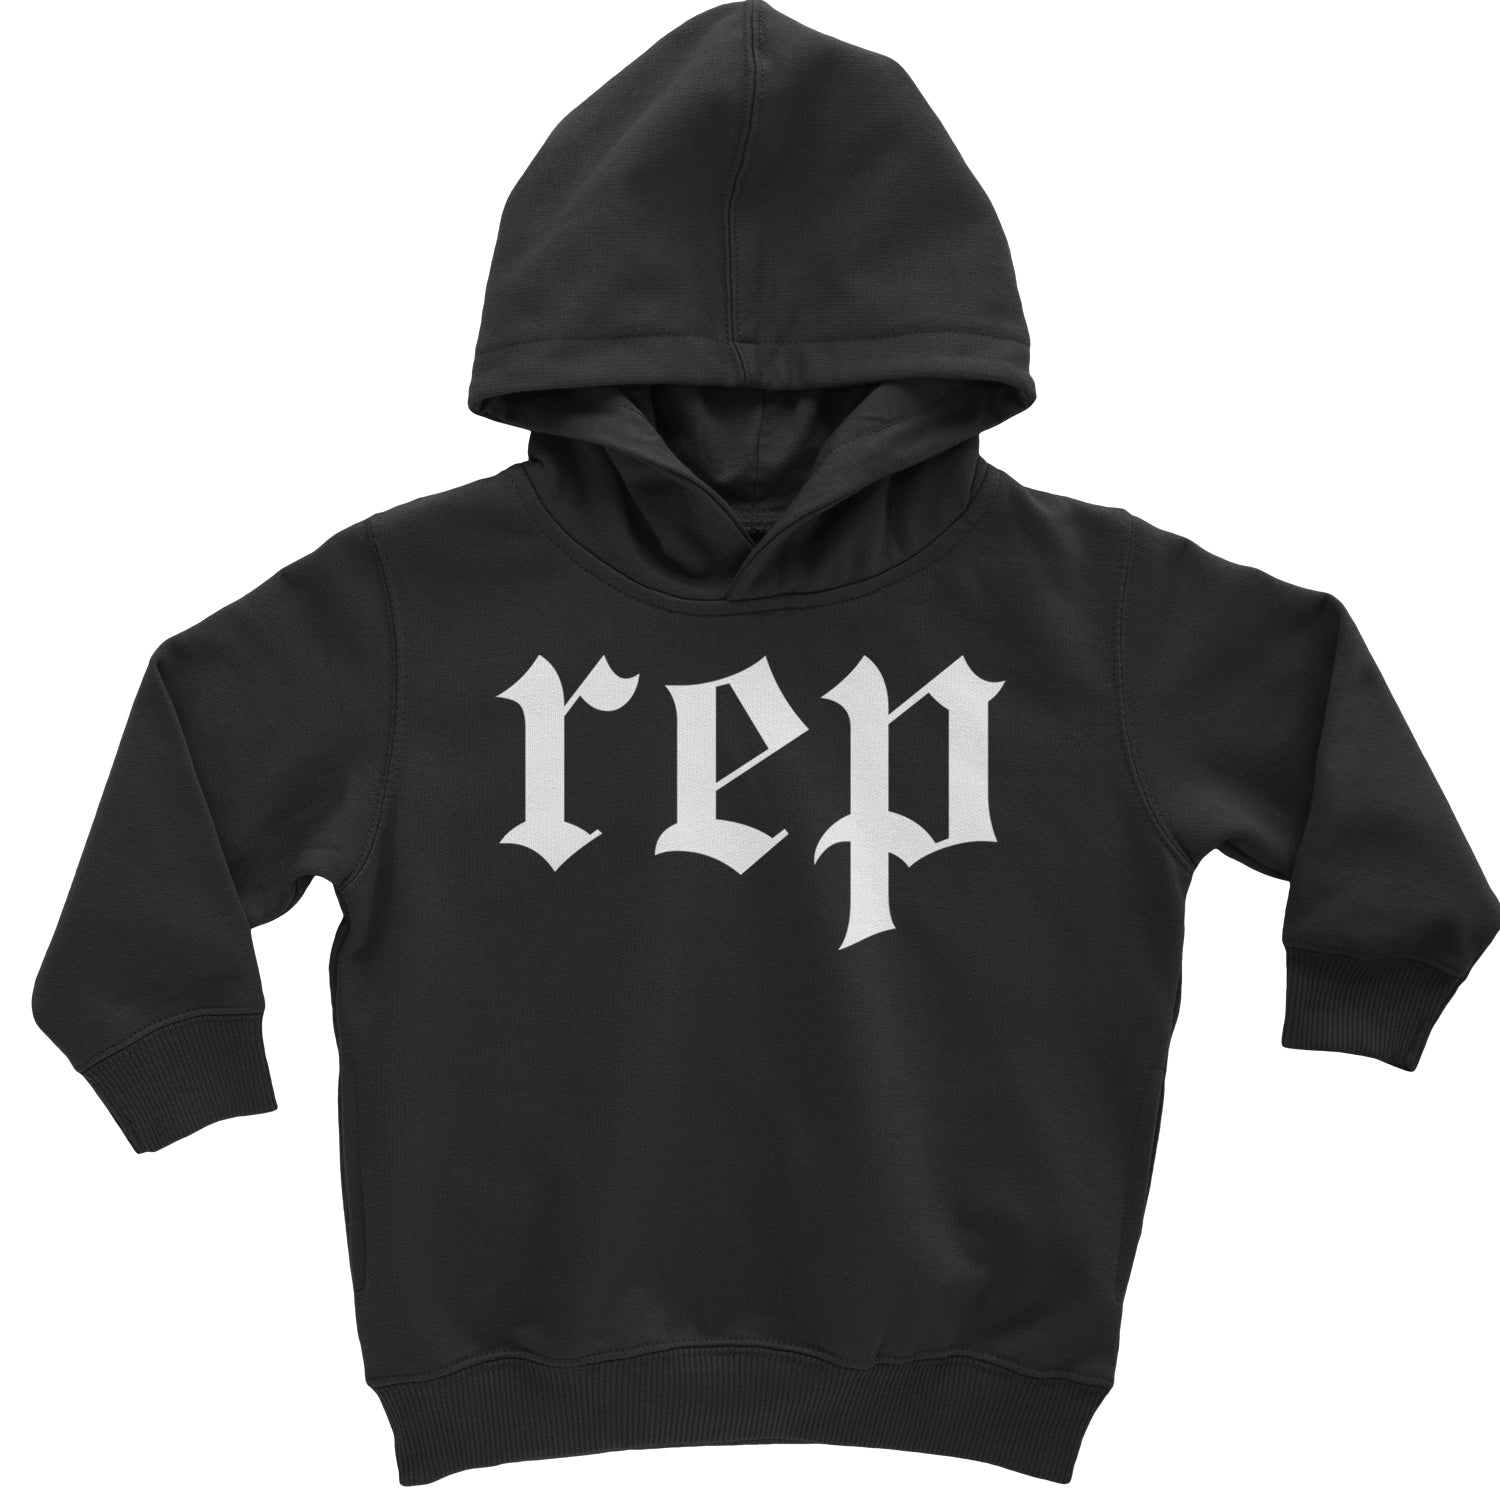 REP Reputation Eras Music Lover Gift Fan Favorite Toddler Hoodie And Infant Fleece Romper Black